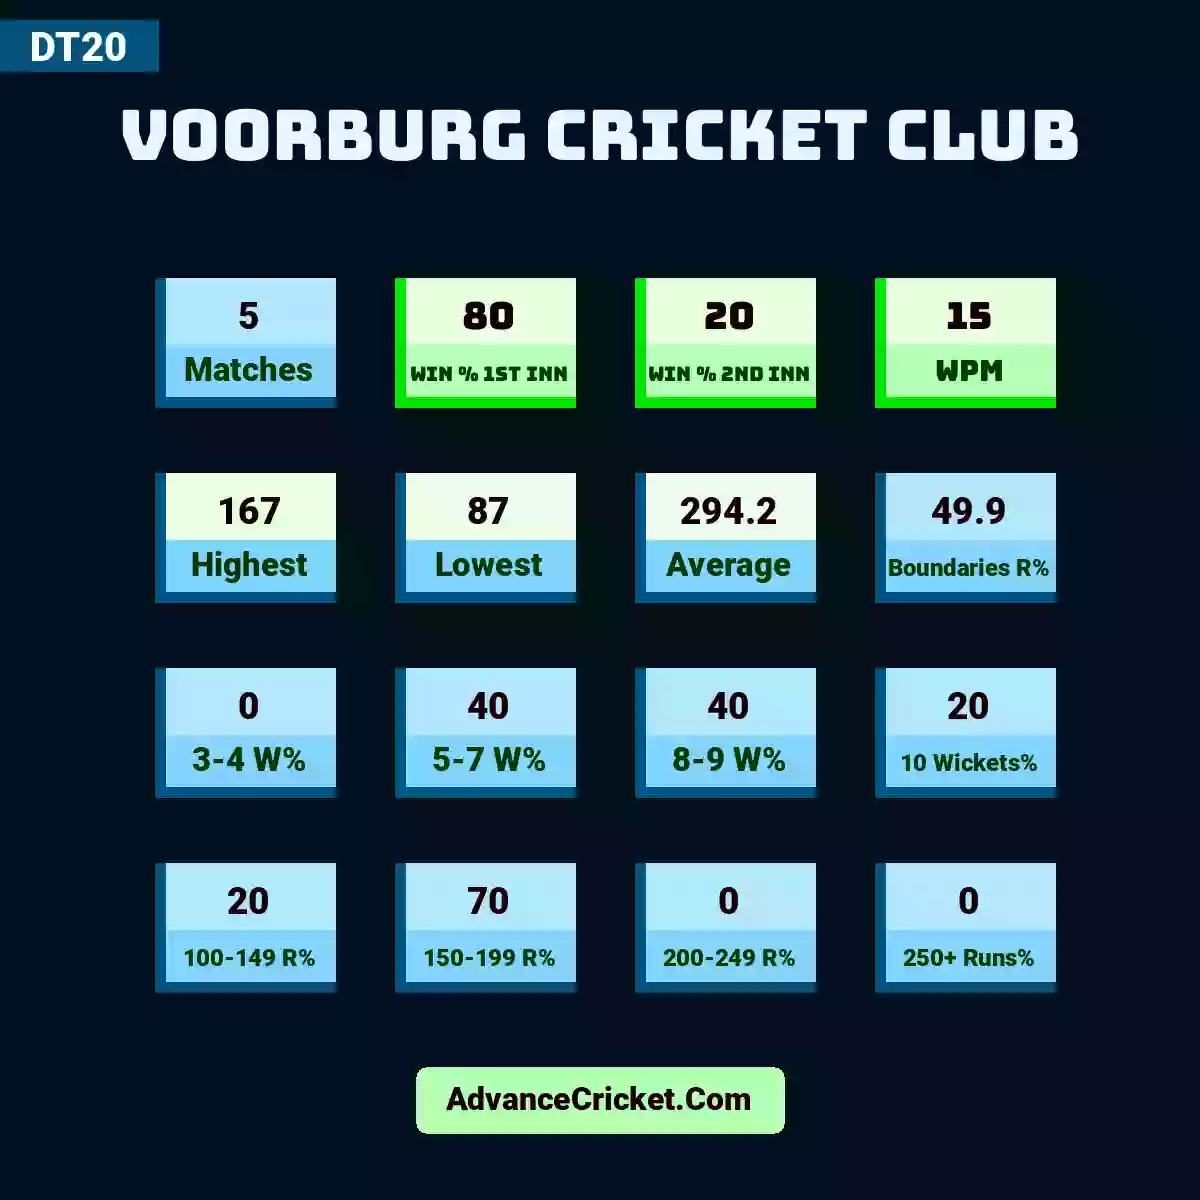 Image showing Voorburg Cricket Club DT20 with Matches: 5, Win % 1st Inn: 80, Win % 2nd Inn: 20, WPM: 15, Highest: 167, Lowest: 87, Average: 294.2, Boundaries R%: 49.9, 3-4 W%: 0, 5-7 W%: 40, 8-9 W%: 40, 10 Wickets%: 20, 100-149 R%: 20, 150-199 R%: 70, 200-249 R%: 0, 250+ Runs%: 0.